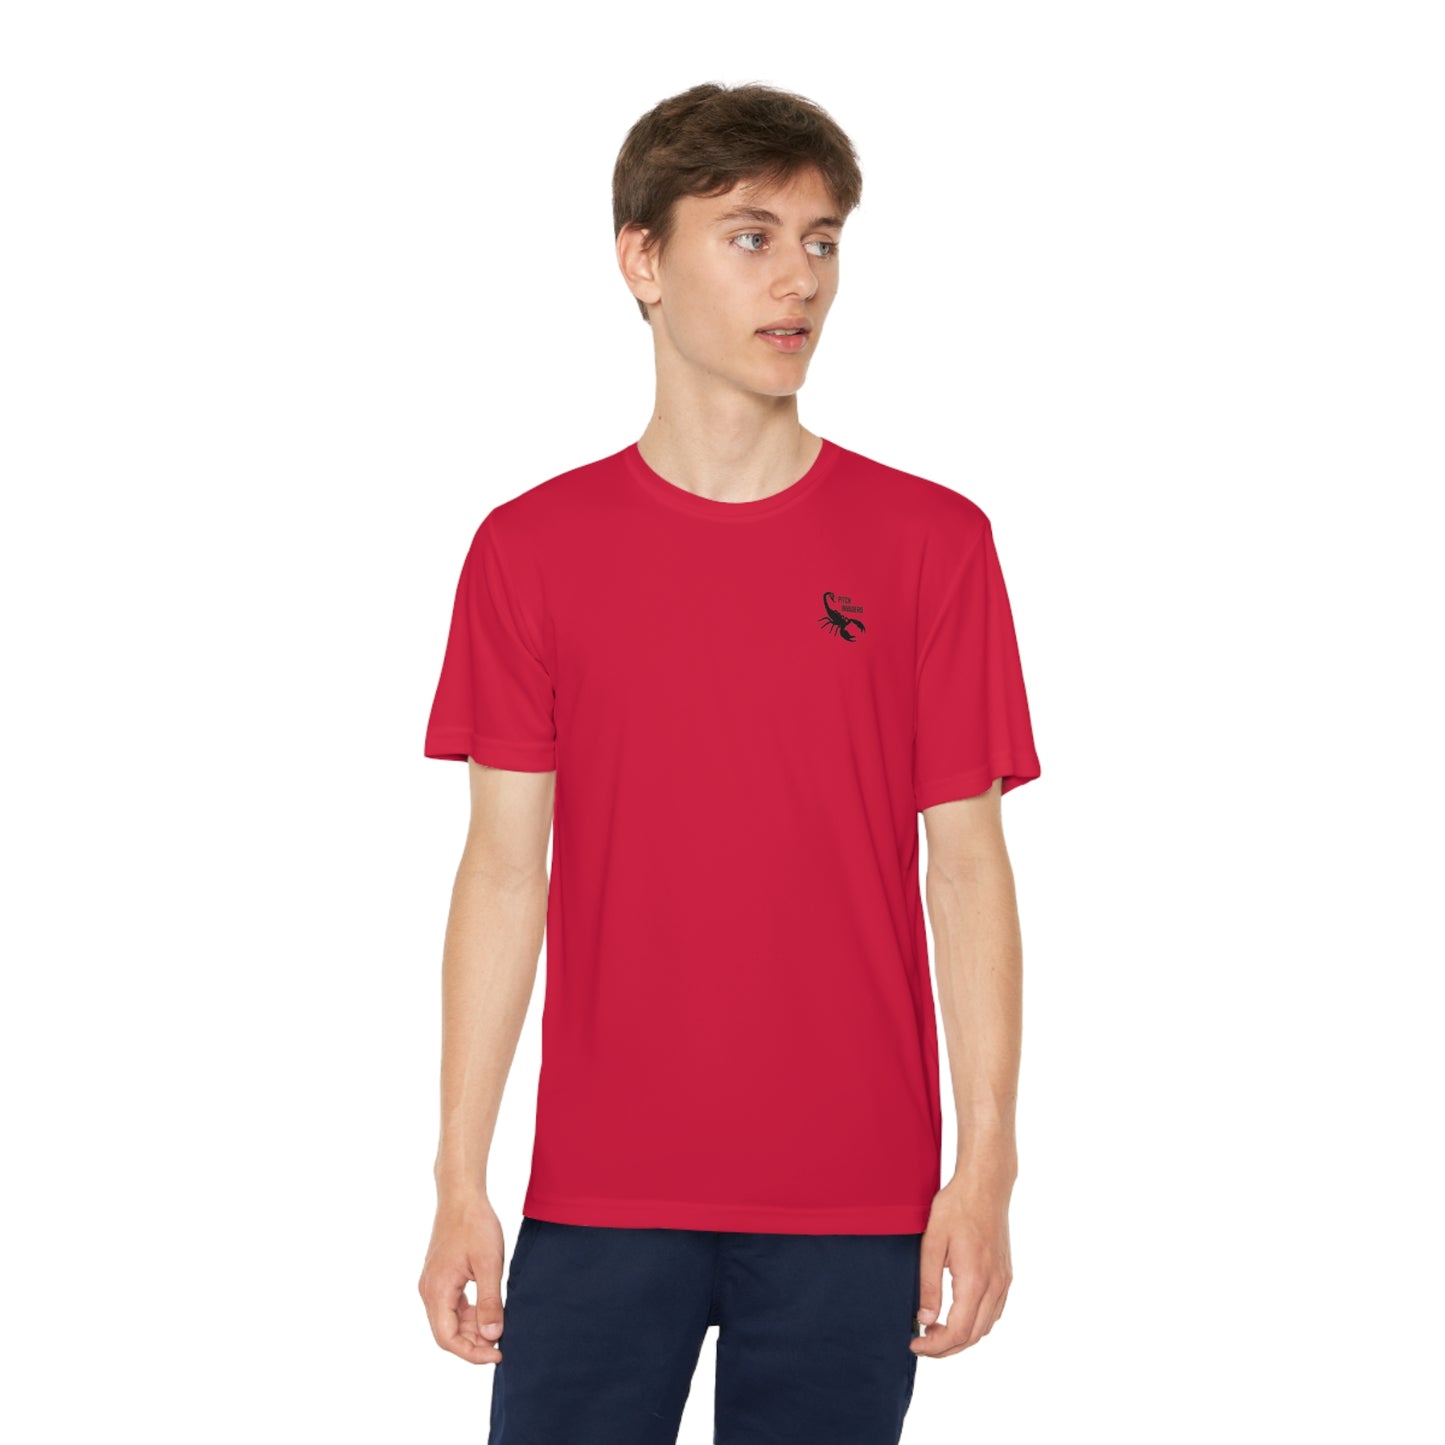 World Class Youth Athletic T-Shirt (Unisex)